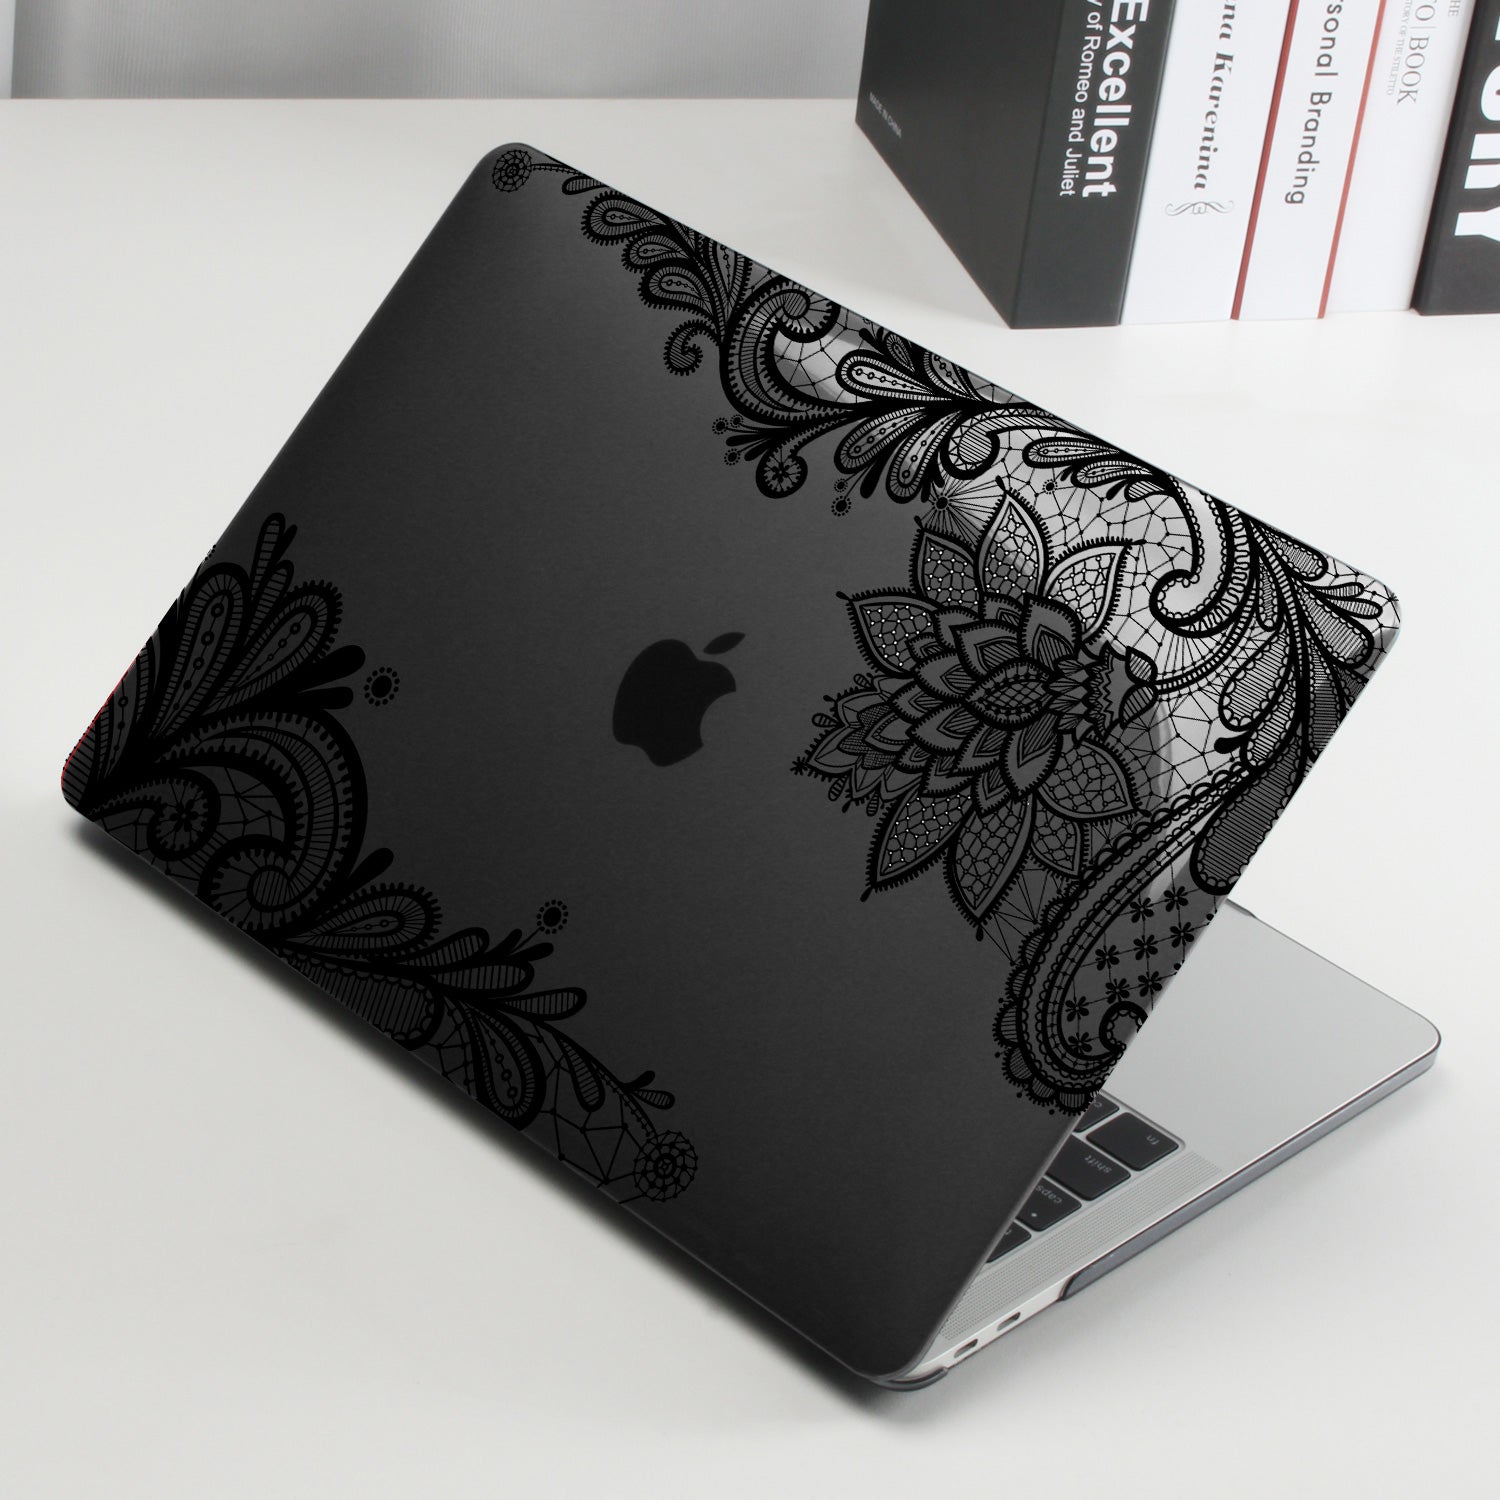 Black lace Macbook case